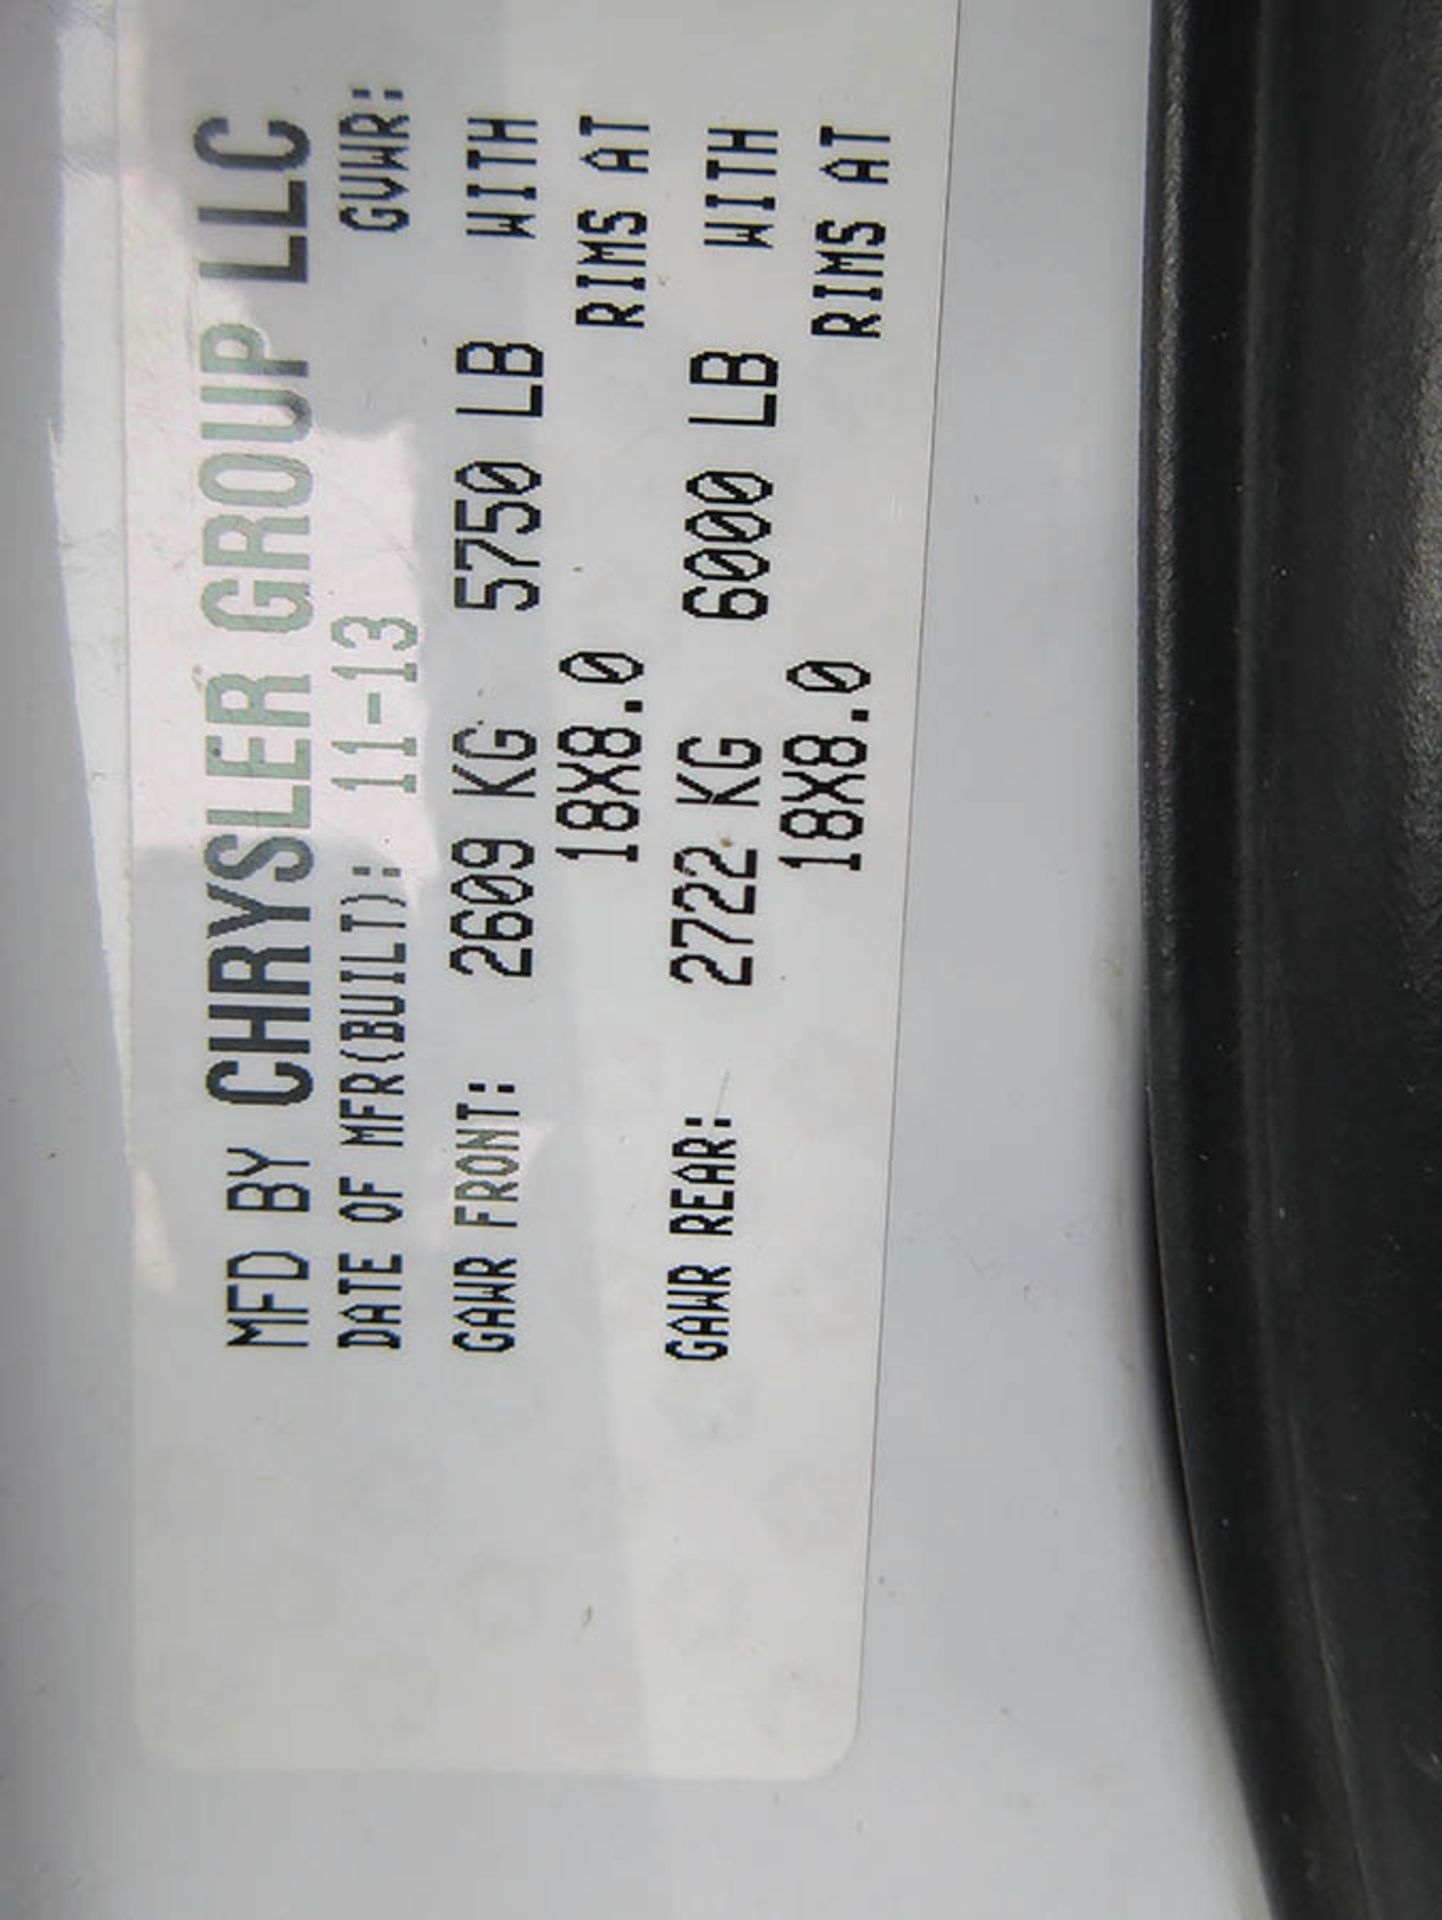 2014 WHITE DODGE RAM 2500 UTILITY TRUCK, MILES: 175,574, 4-DOOR, FUEL: DIESEL, ENGINE: CUMMINS 6.7L, - Image 16 of 17